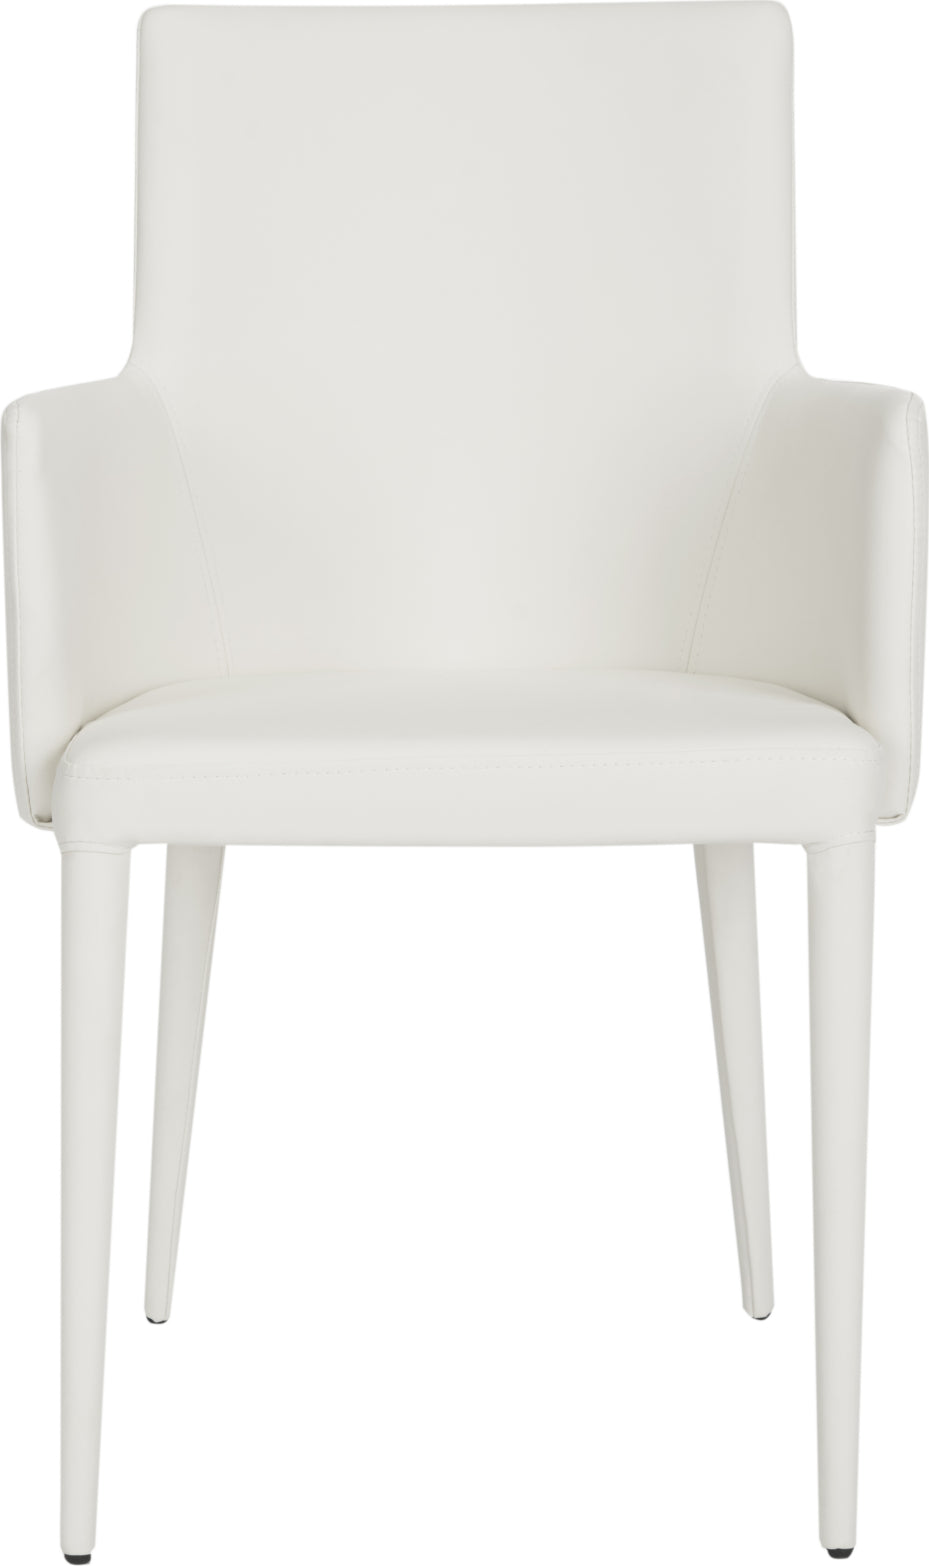 Safavieh Summerset Arm Chair White Furniture main image